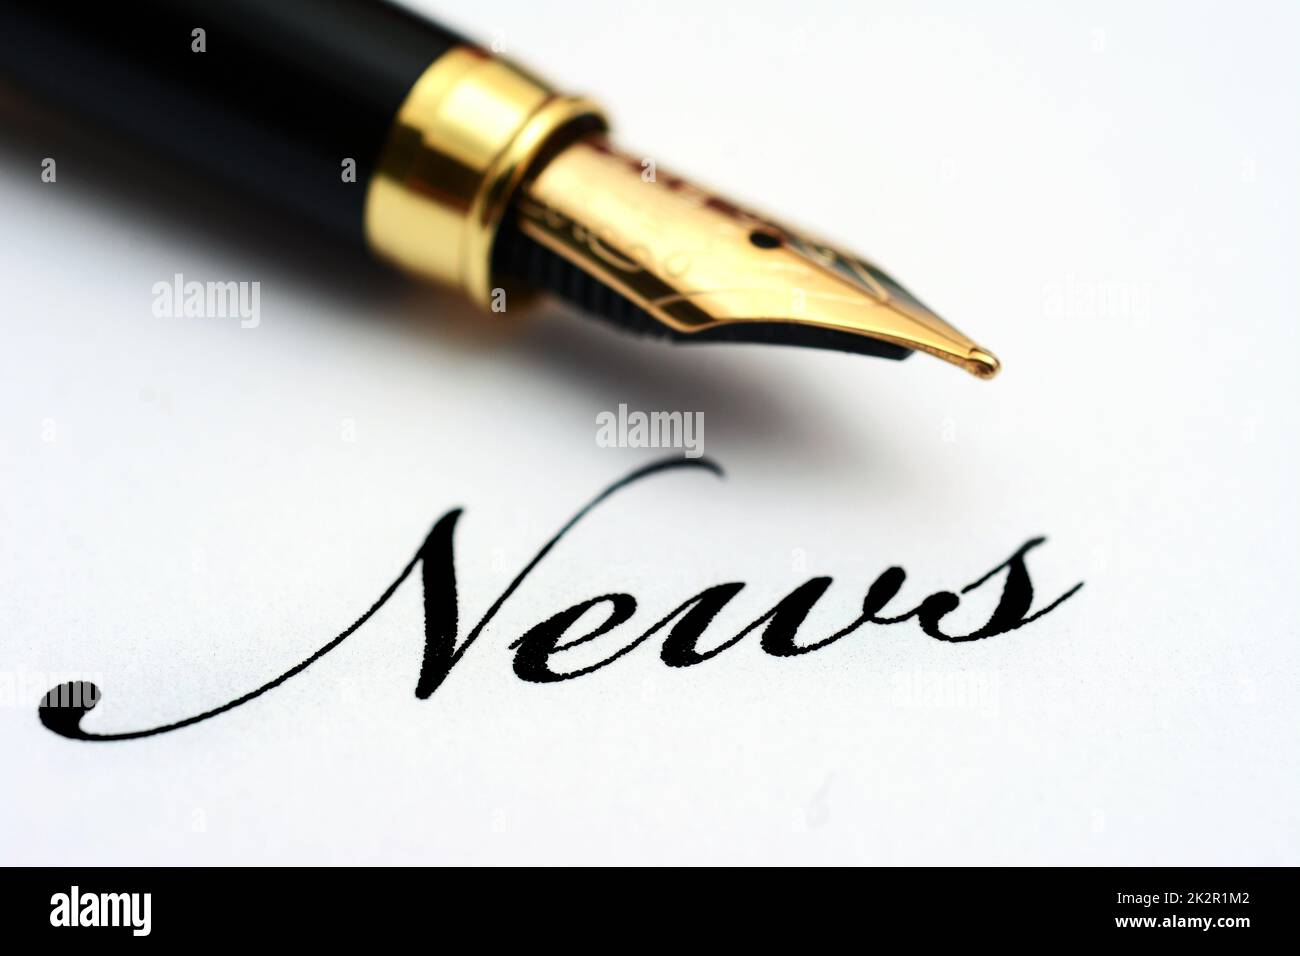 Fountain pen on news text Stock Photo